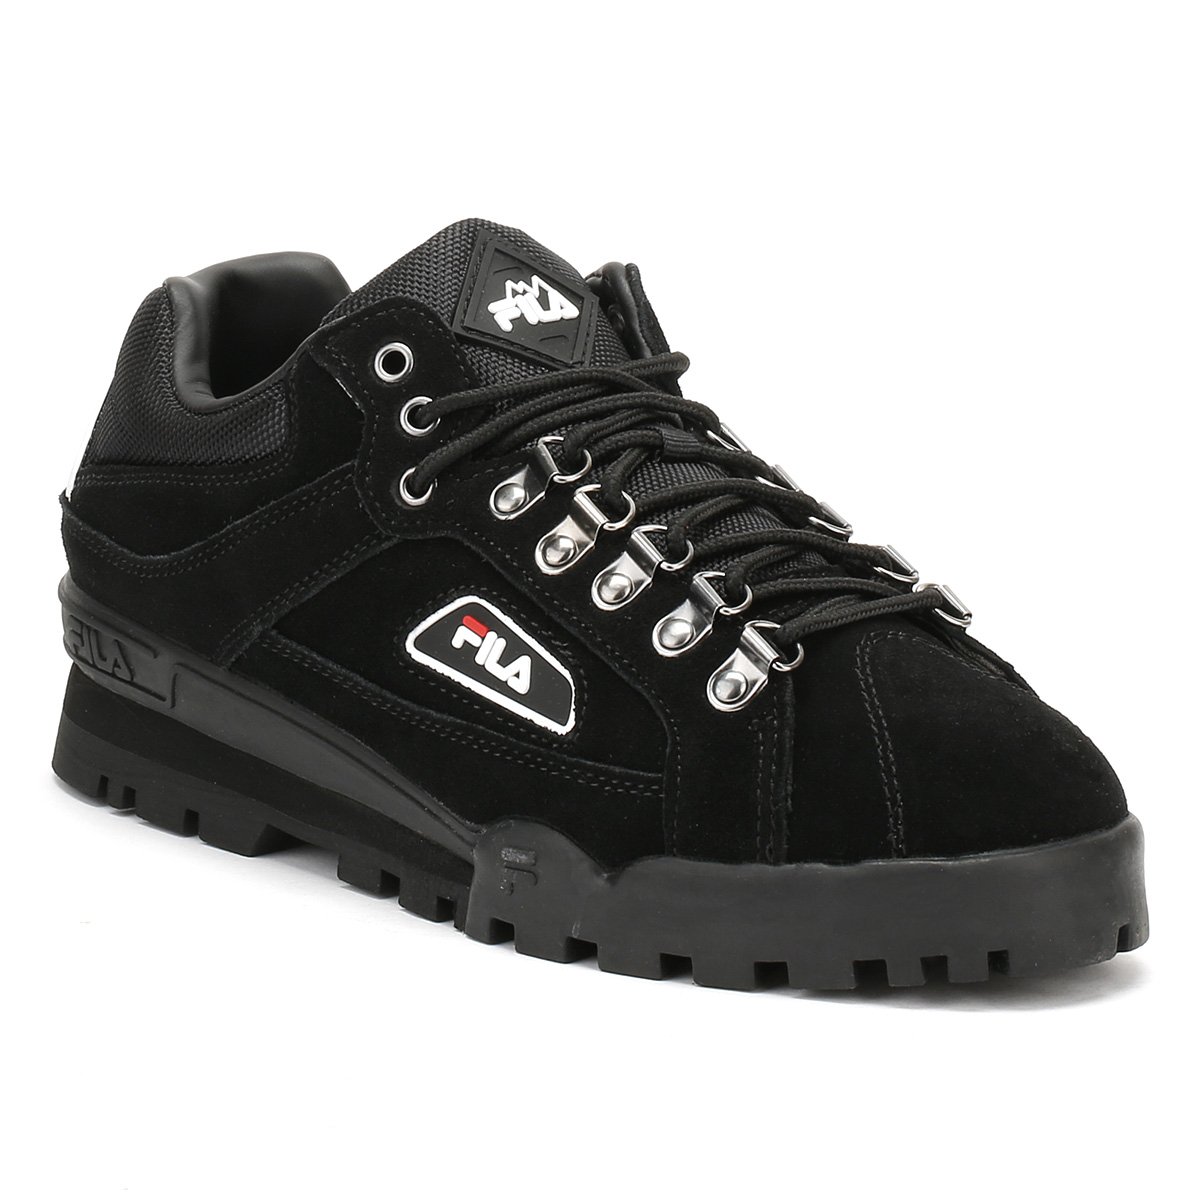 Fila Mens Athletic Shoes in Black Color, Size 4 RYP | eBay